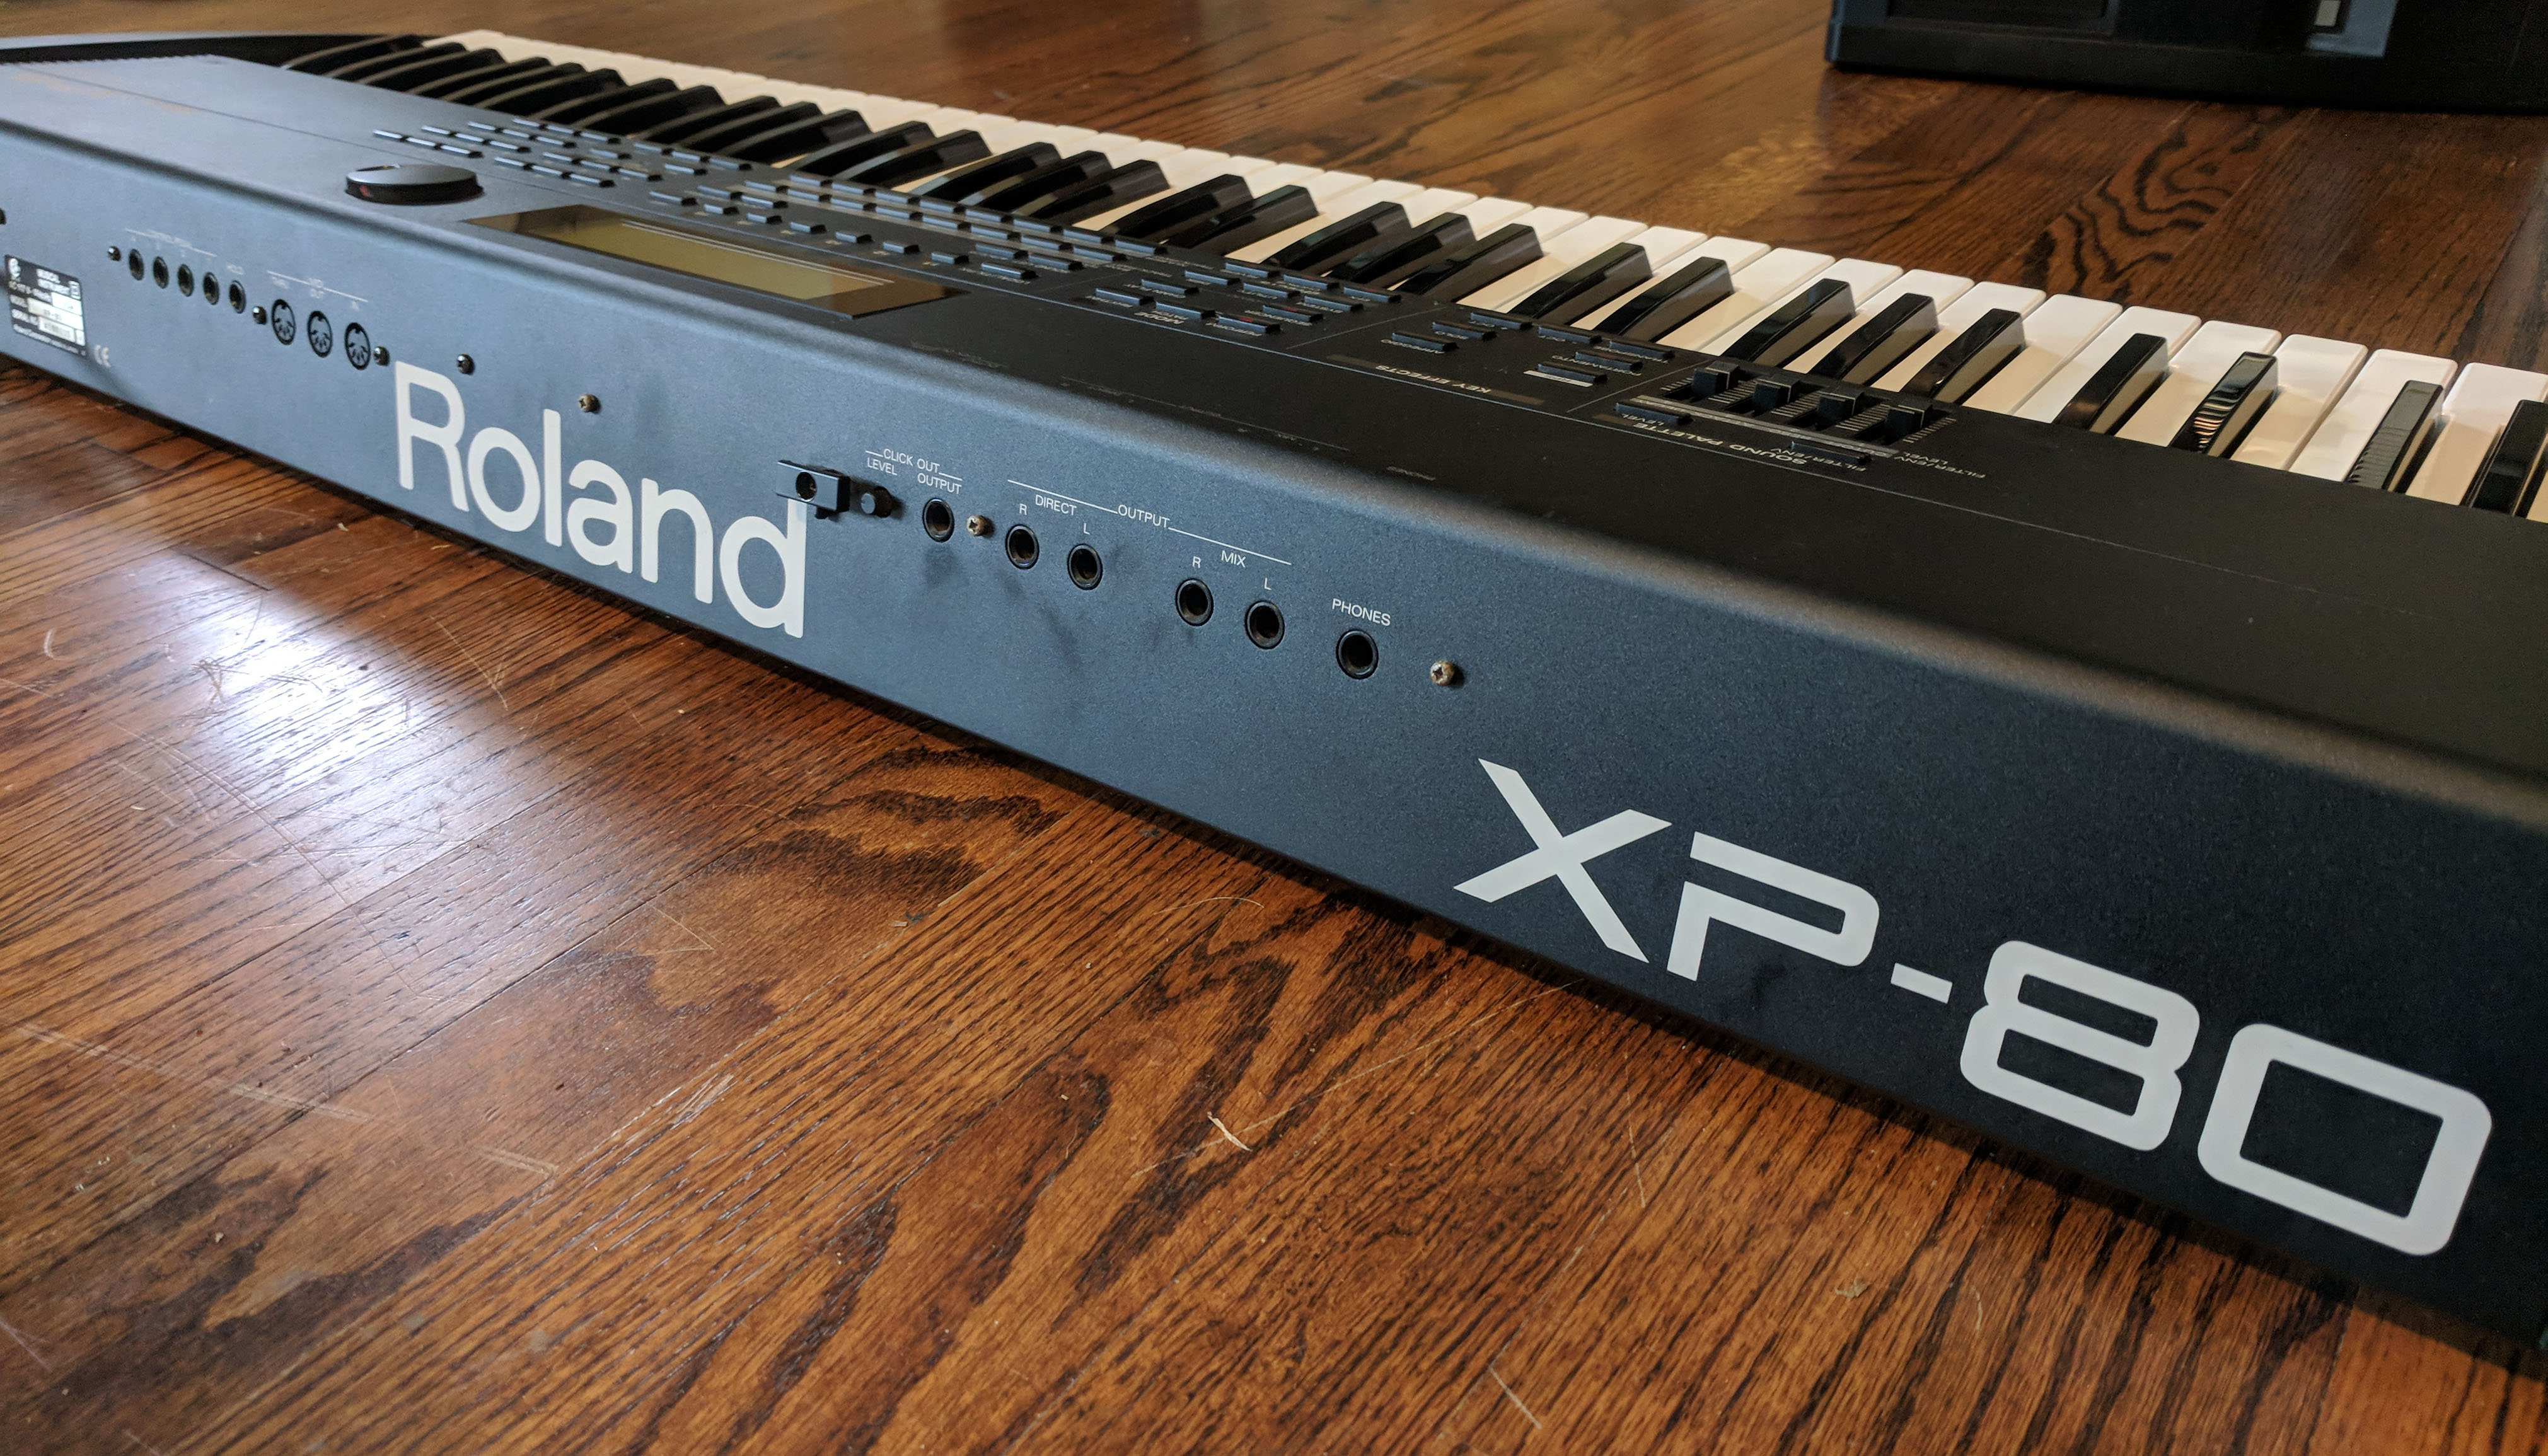 Roland XP-80